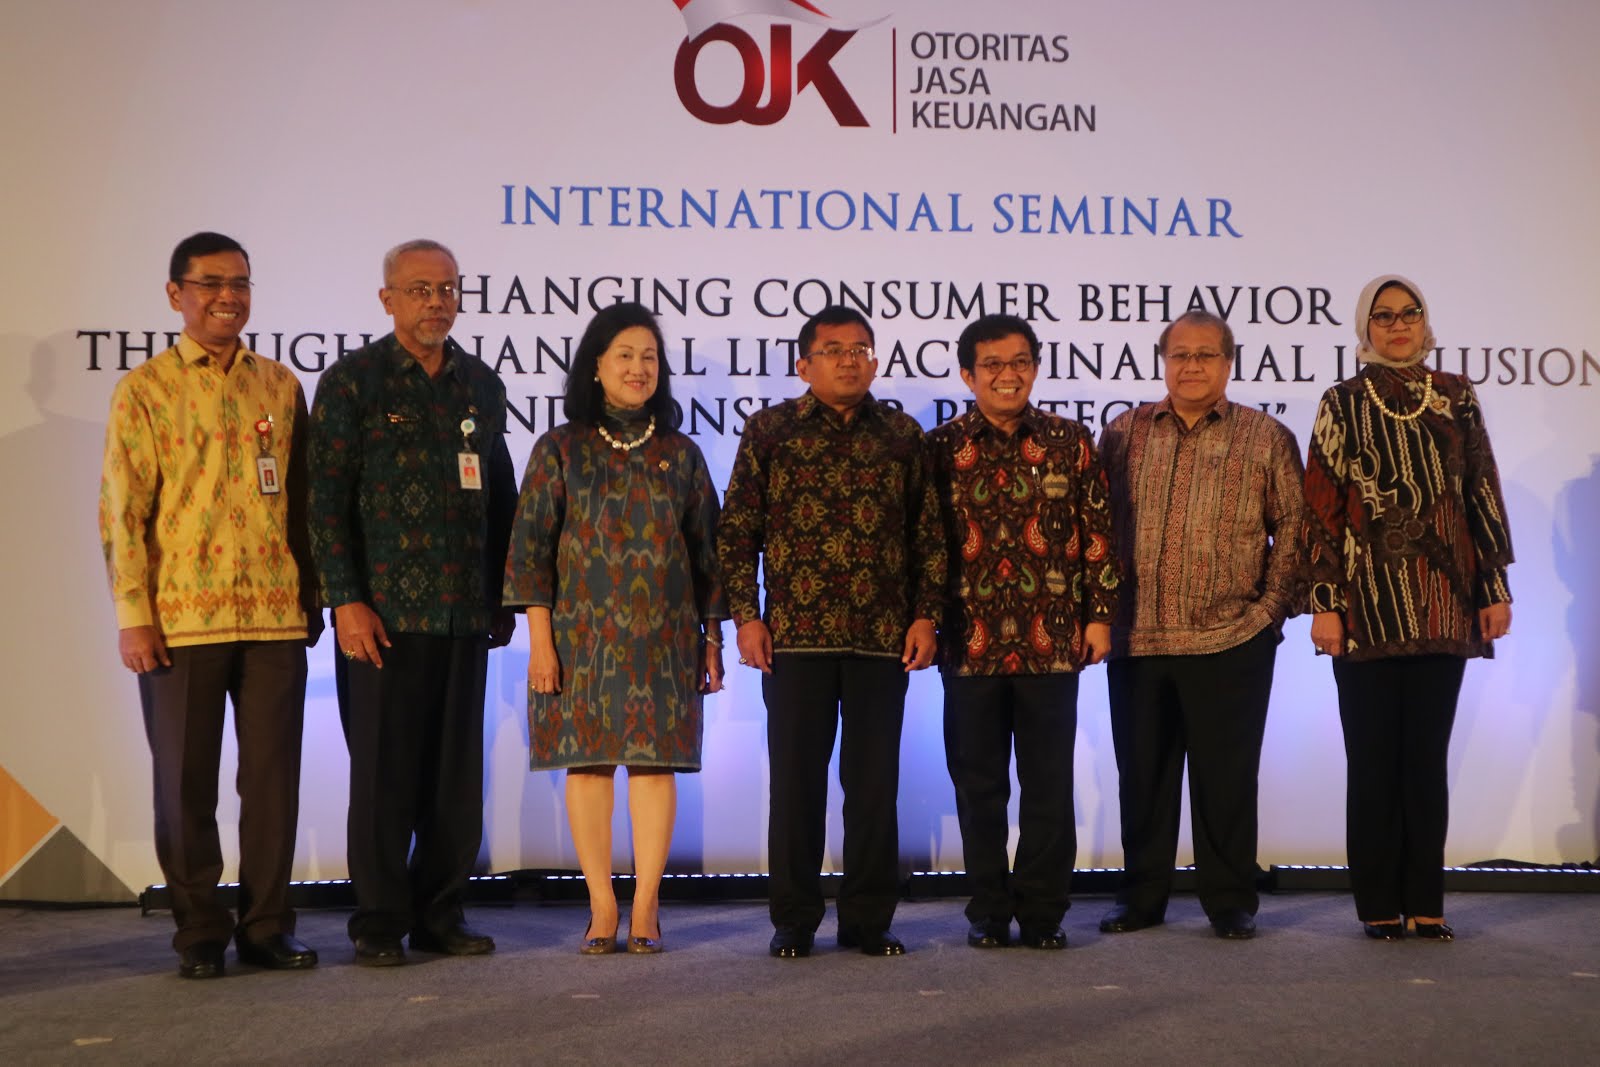 OJK International Workshop on Financial Inclusion, Bali 4-5 May 2017